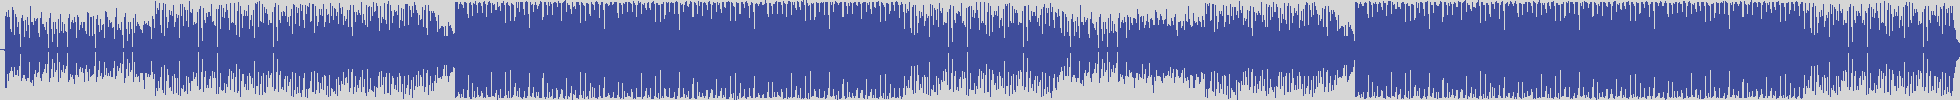 nf_boyz_records [NFY013] Bart Gigants - Gympie Stinger [Original Mix] audio wave form